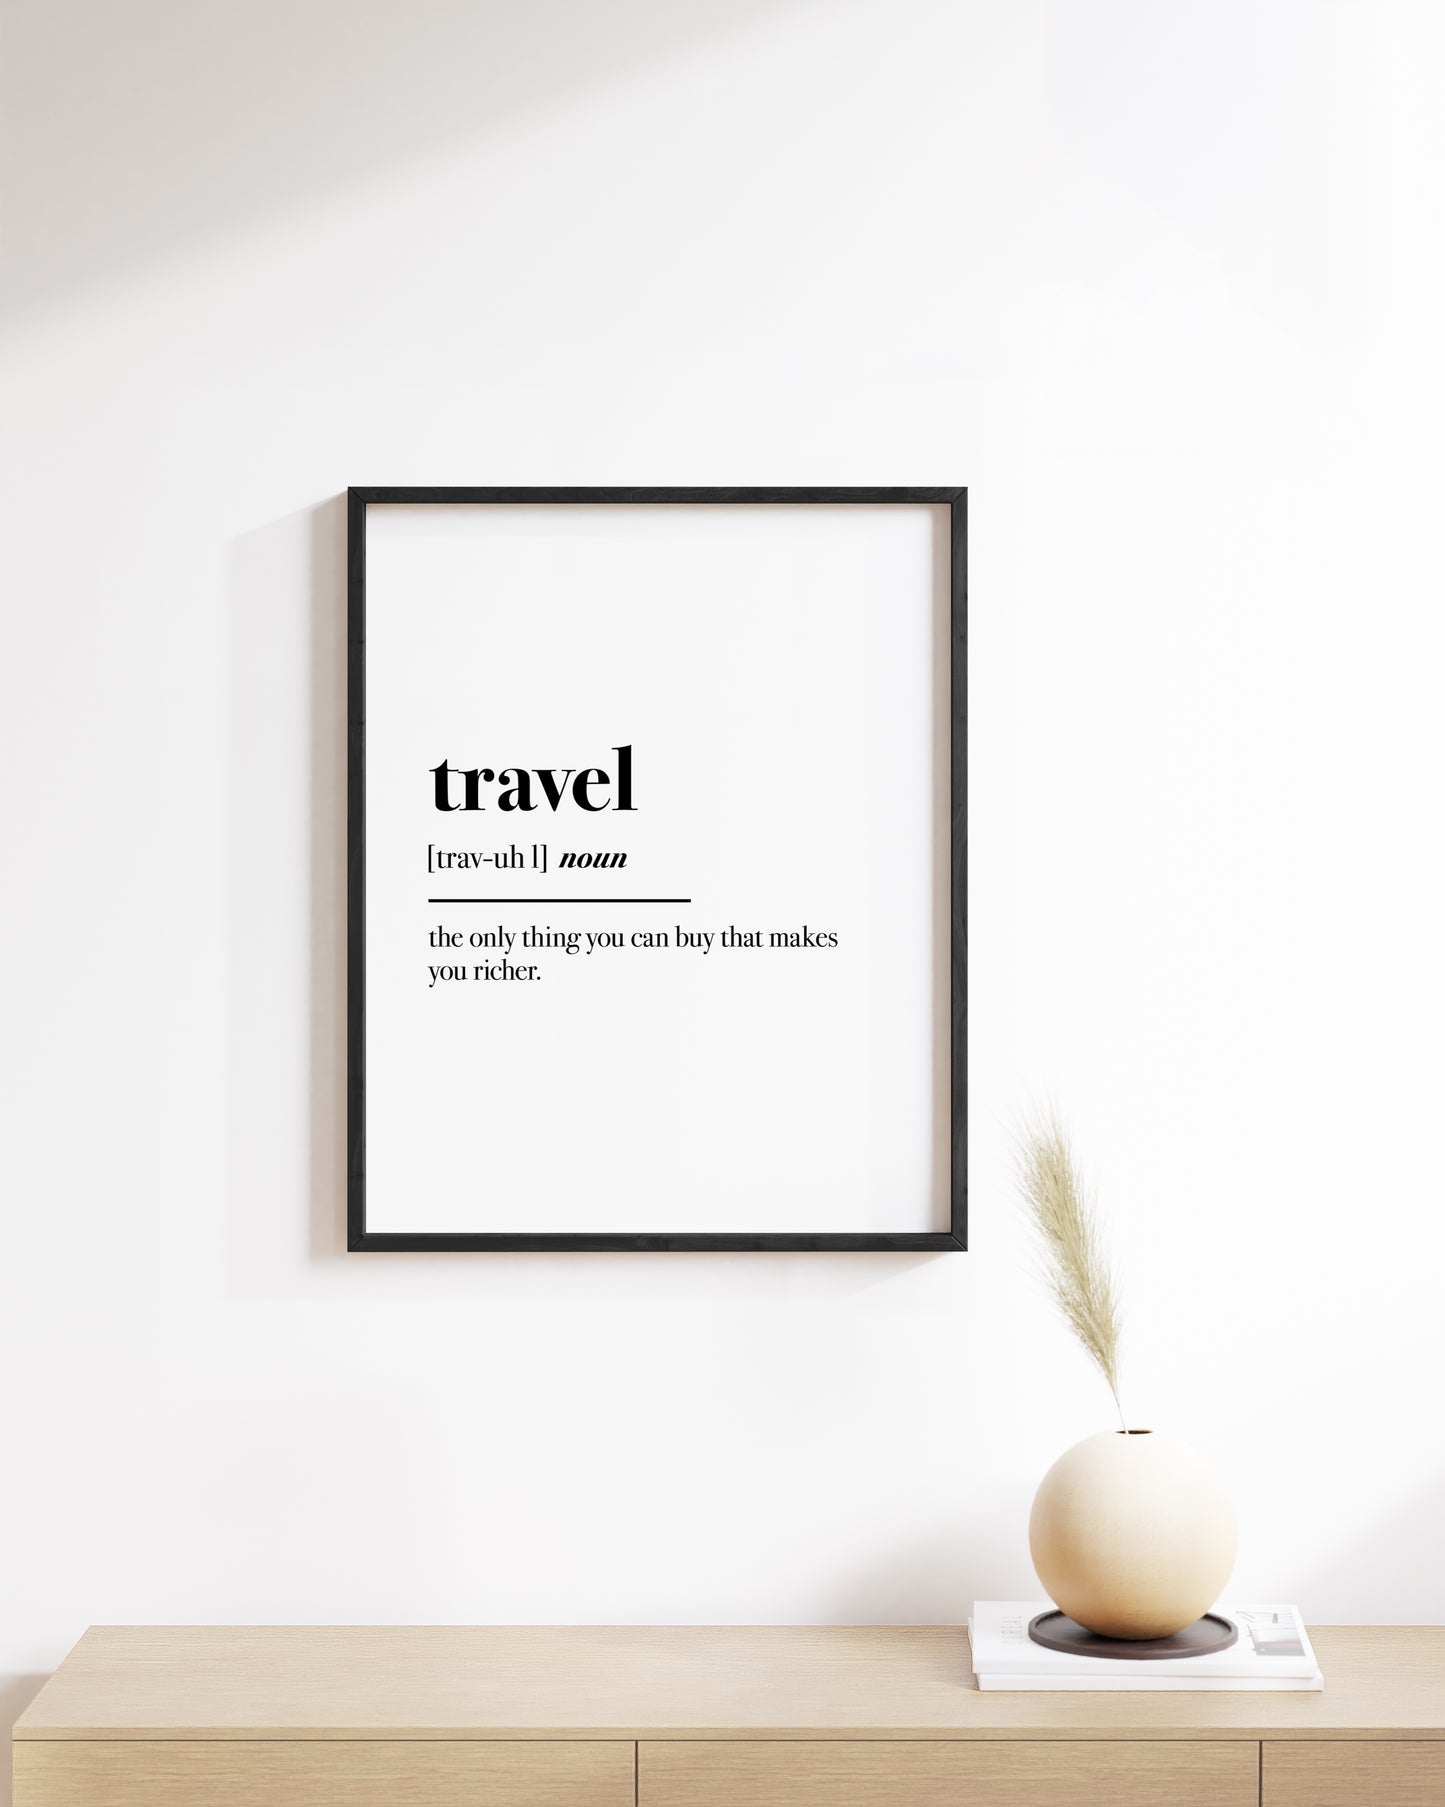 Travel definition